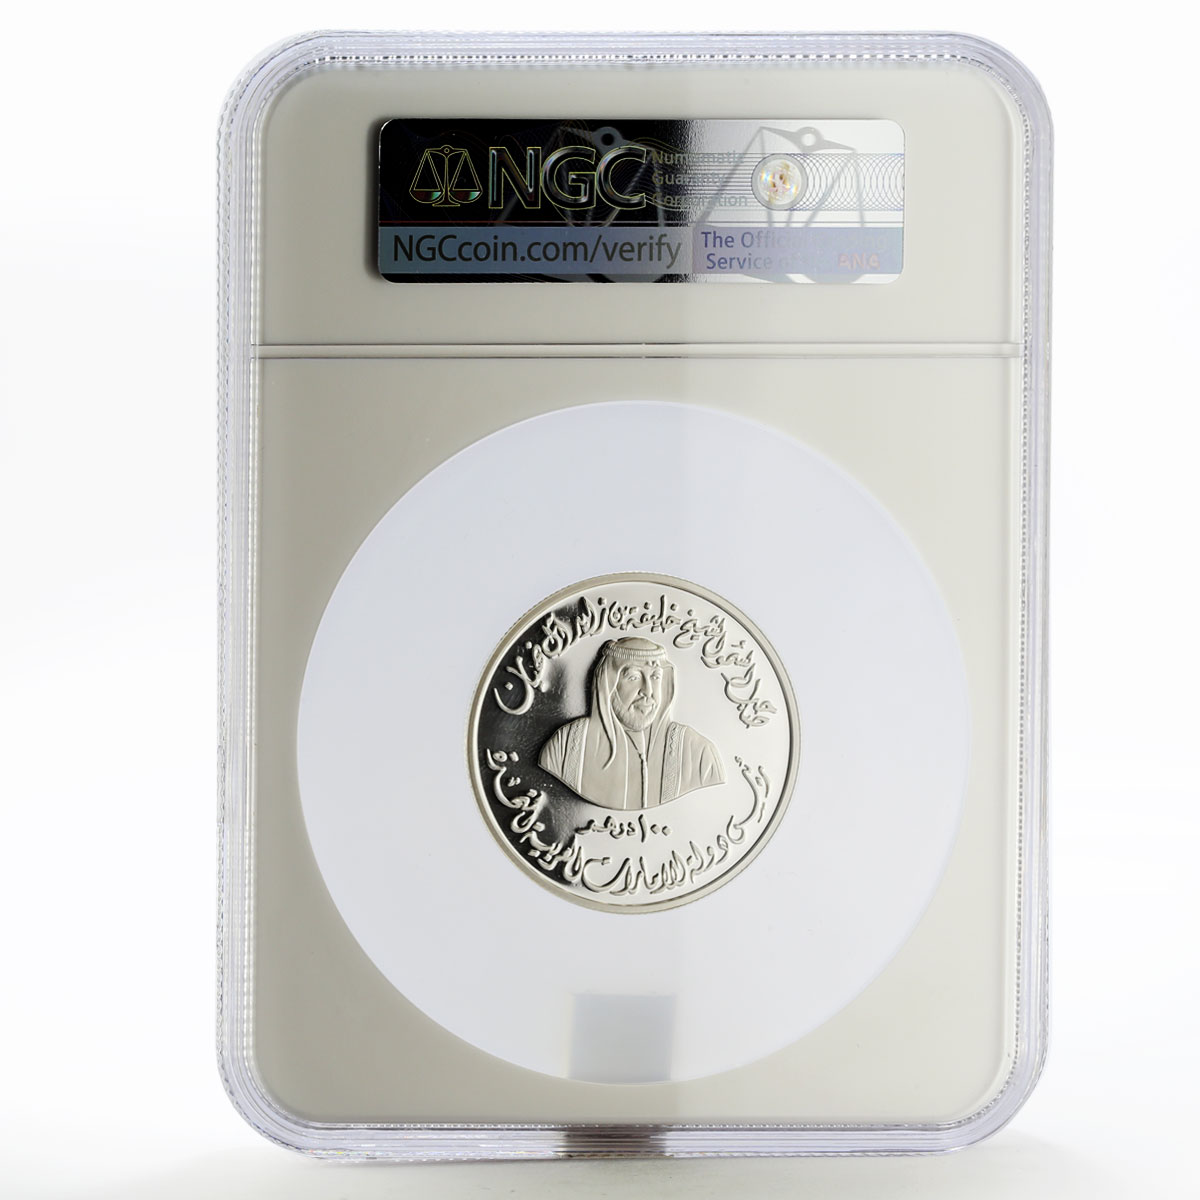 United Arab Emirates 100 dirhams Sheikh Khalifa PF-68 NGC silver coin 2005